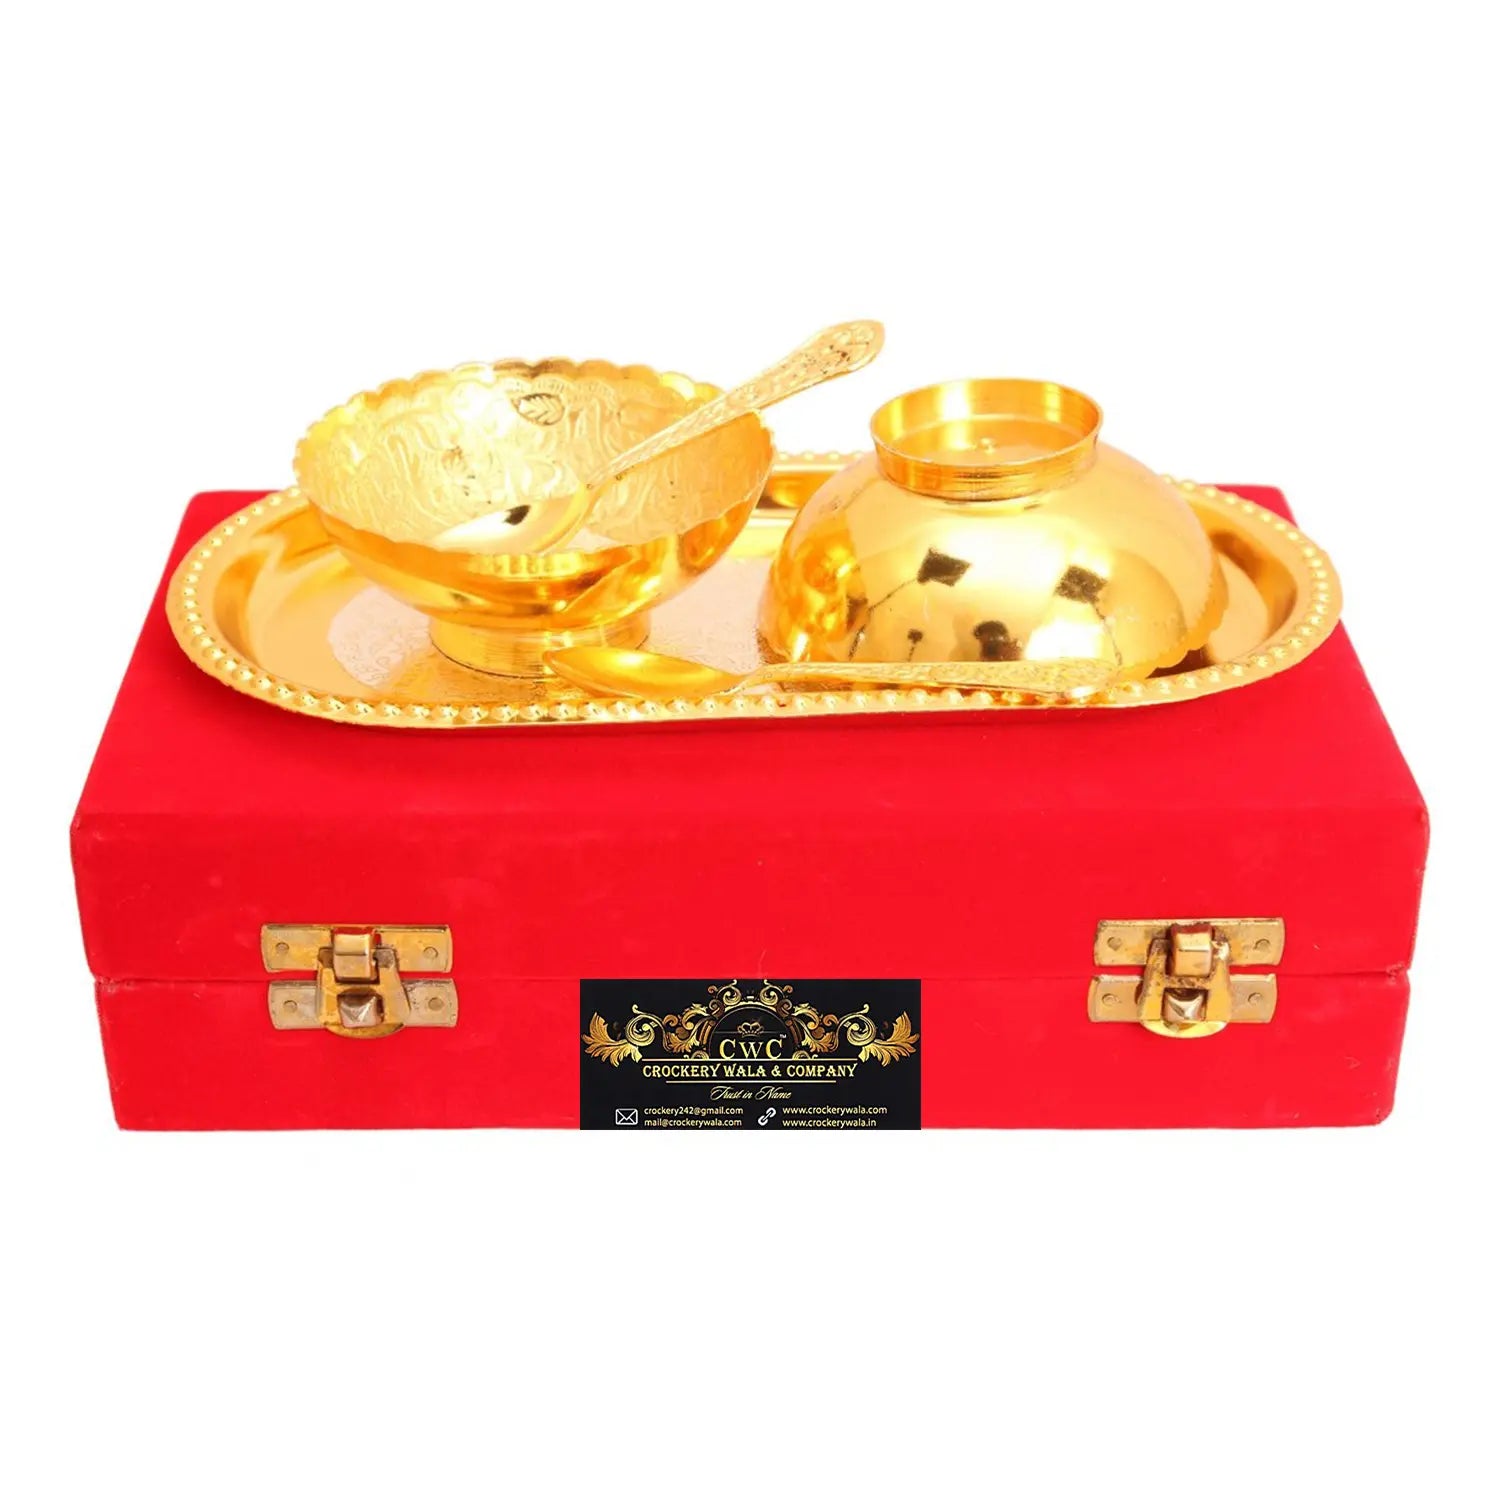 Crockery Wala & Company Silver Plated Gold Polished Bowl Set With 2 Spoons & 1 Tray, 100 Ml, Service For 2, Diwali Gift Item - CROCKERY WALA AND COMPANY 